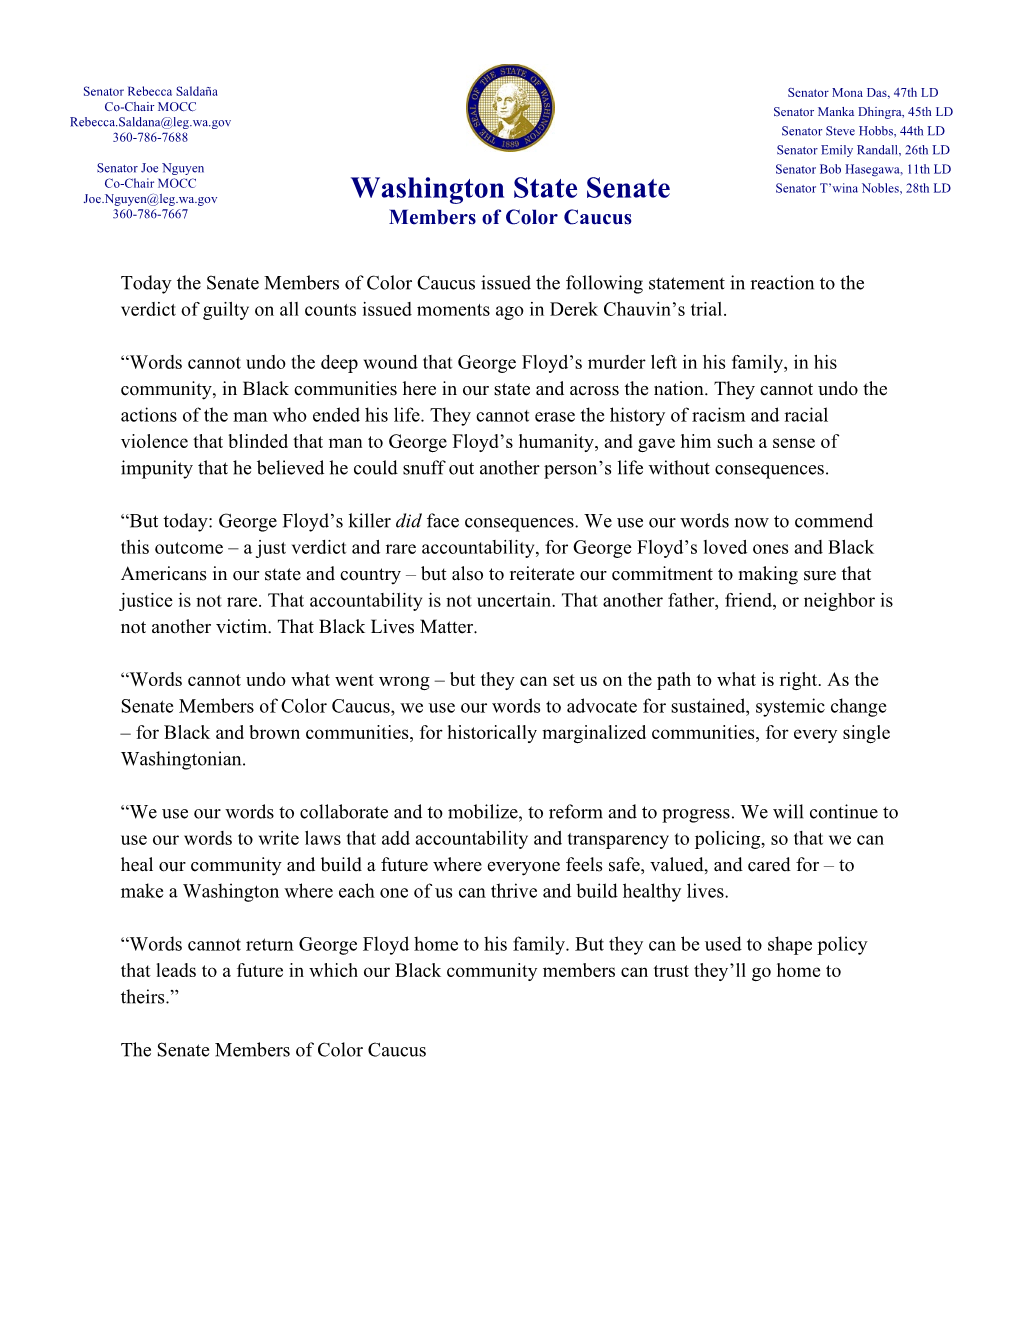 Washington State Senate 360-786-7667 Members of Color Caucus